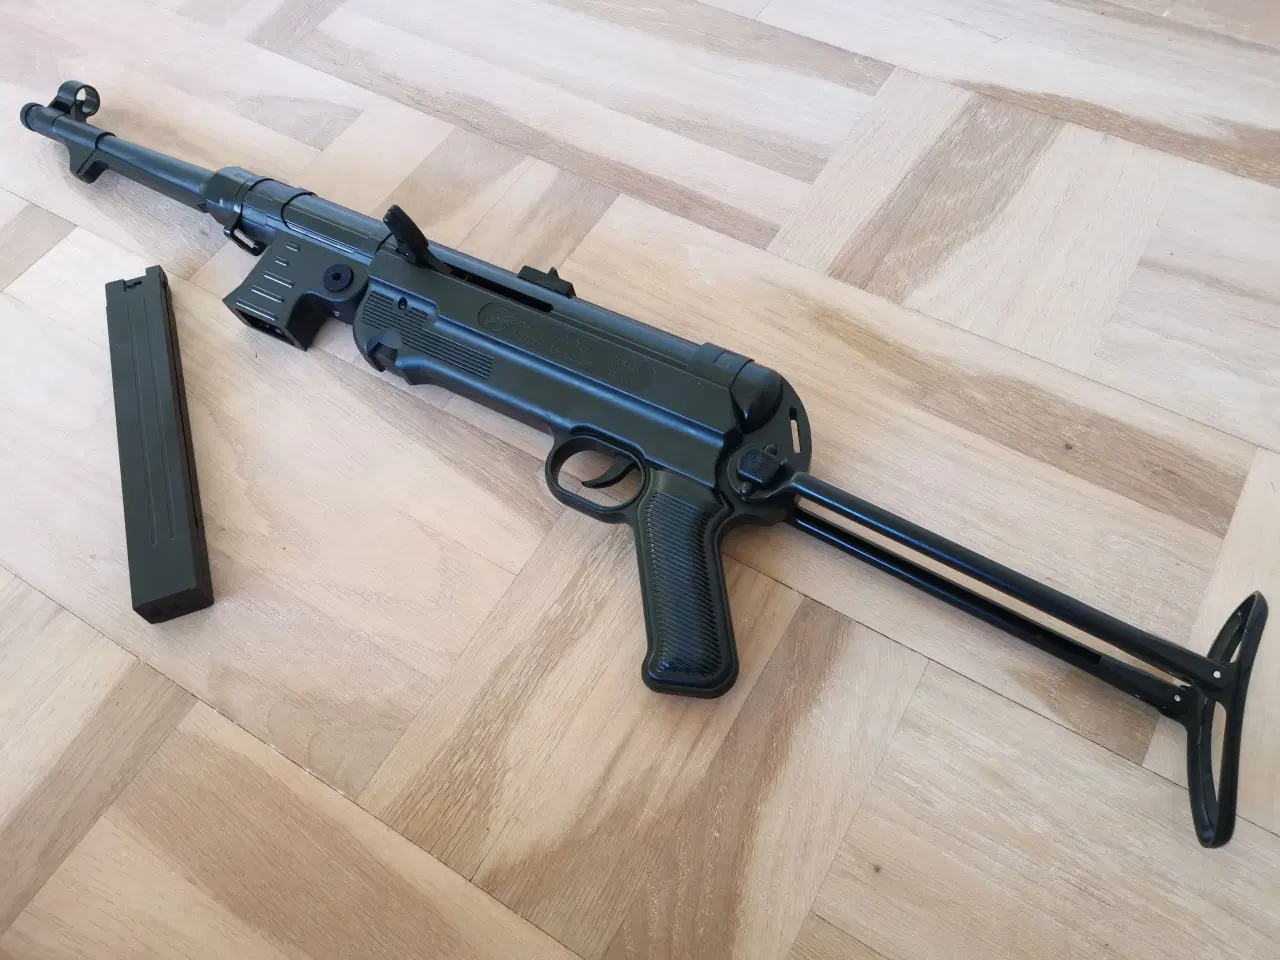 Billede 3 - Tysk MP40 Softgun